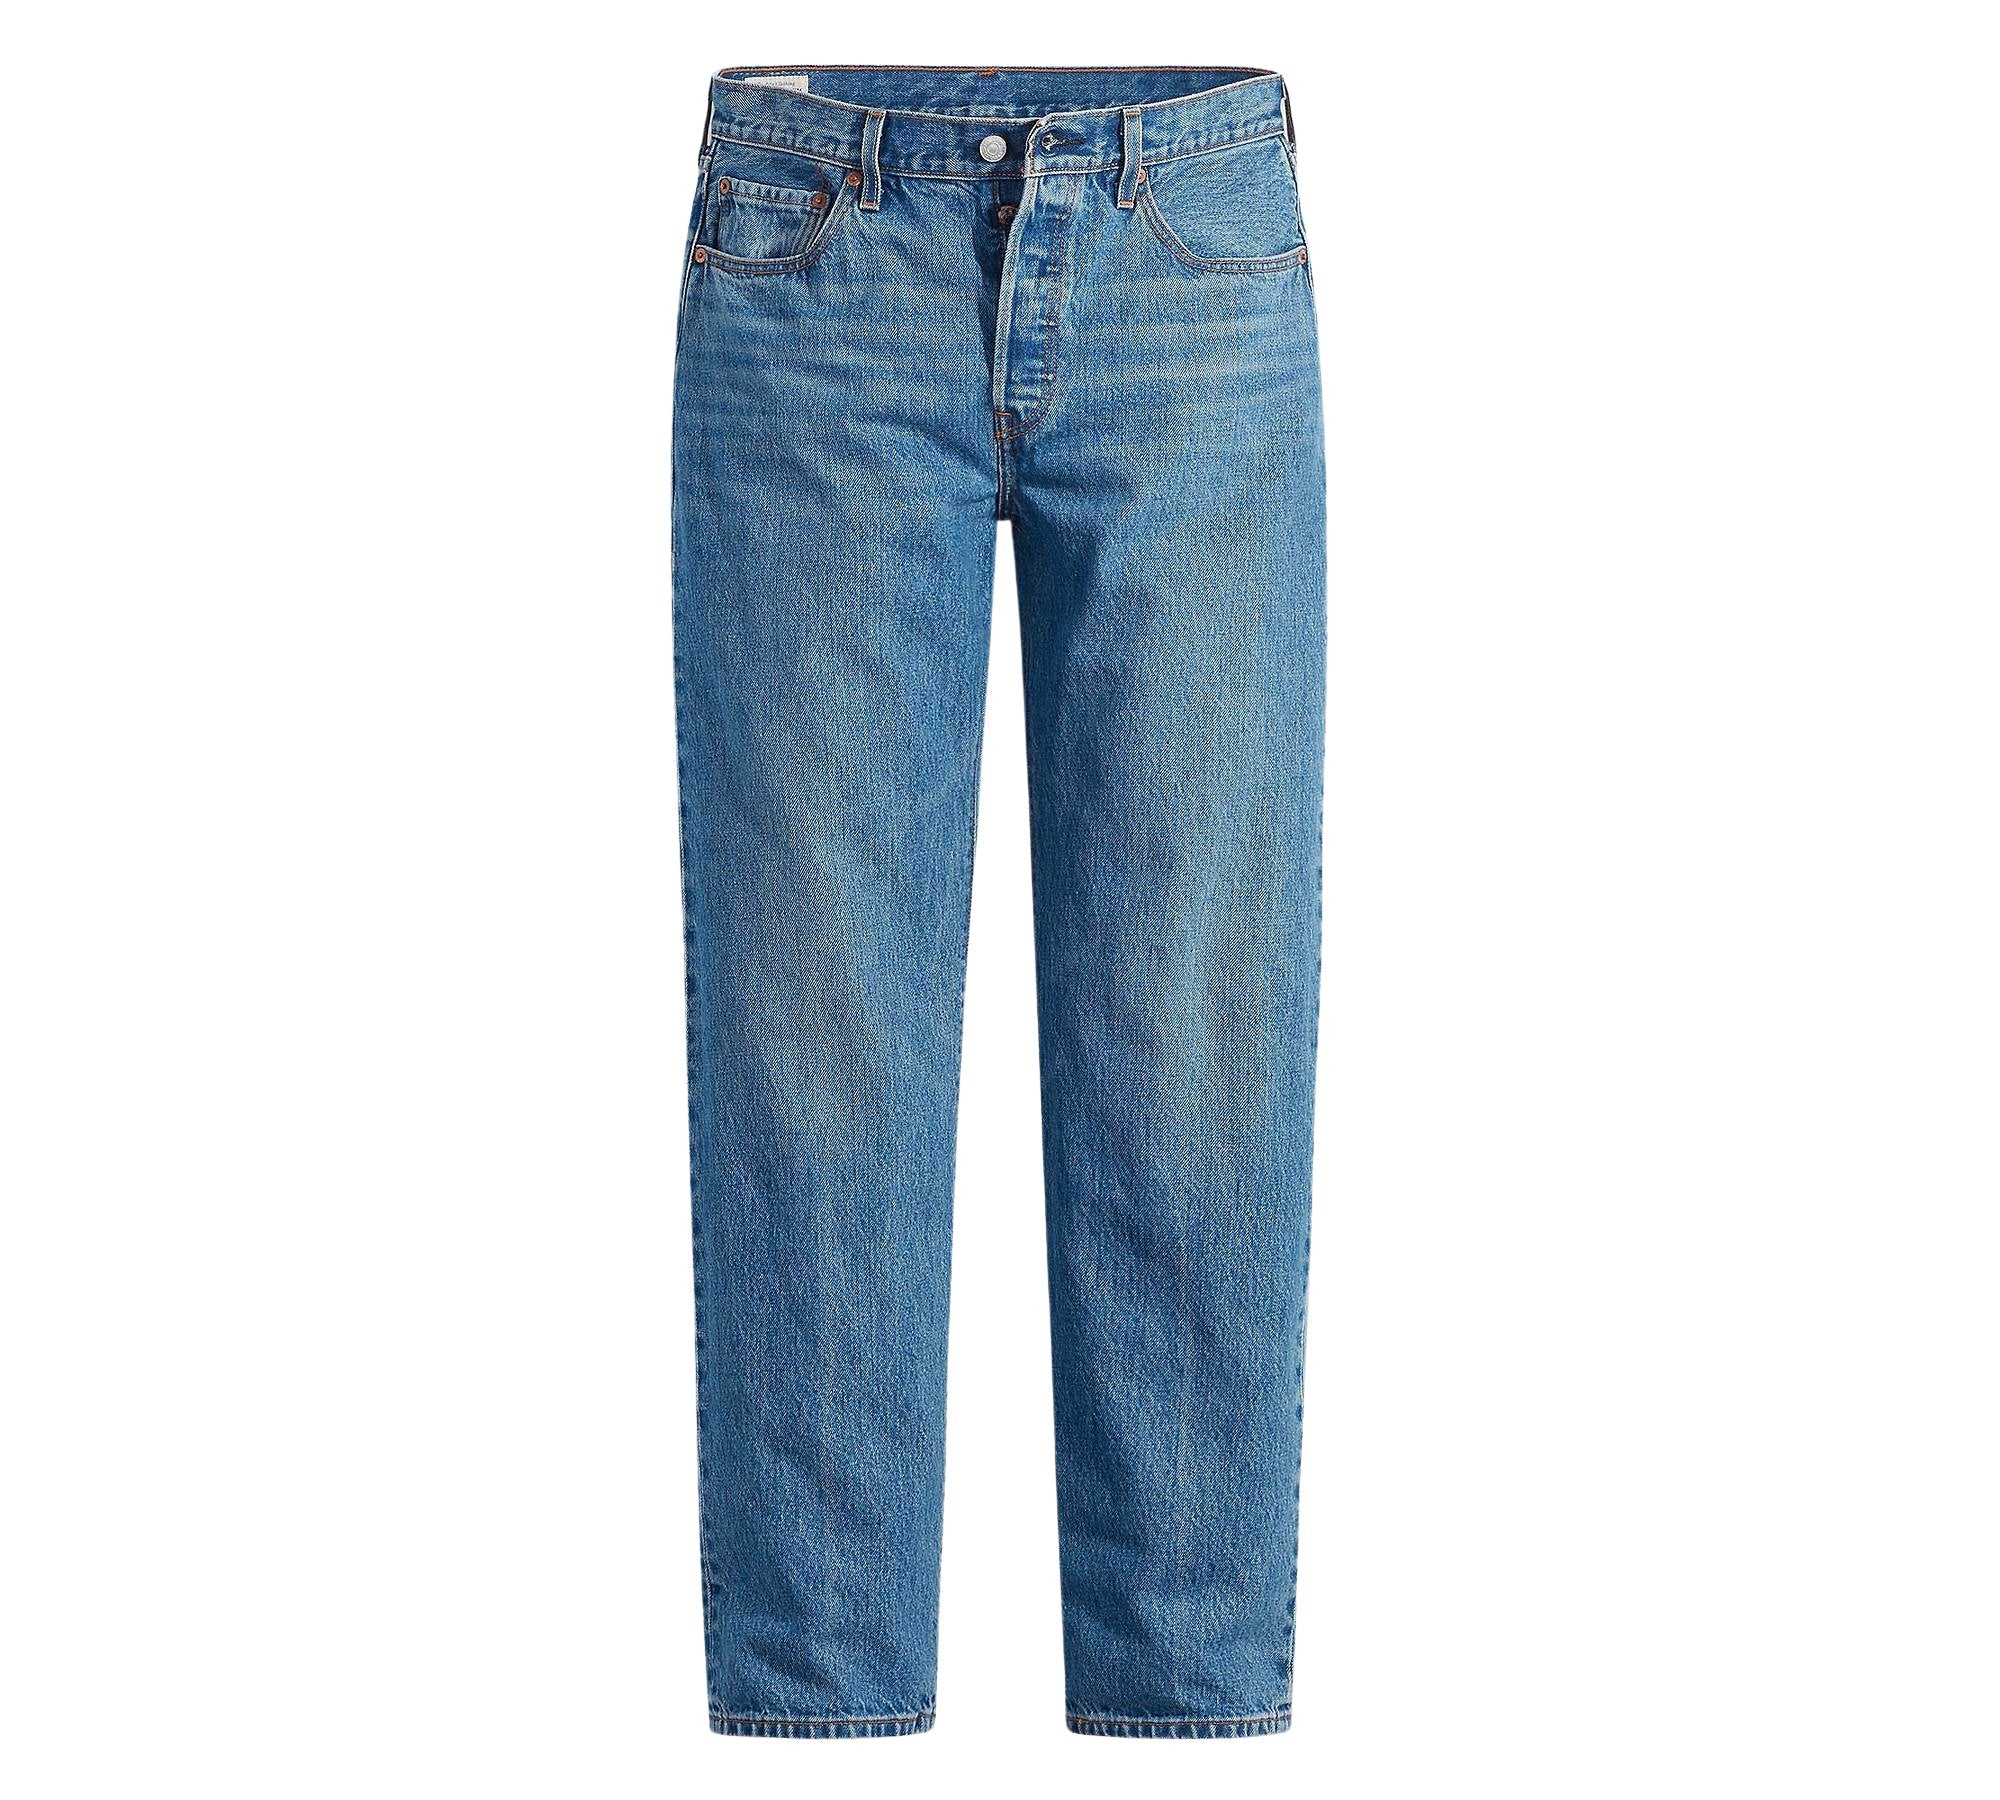 4 Pack - Vintage LEVI'S Classic Blue Zip Fly Jeans - Waist 32 - Length 34 - Vintage Superstore Online